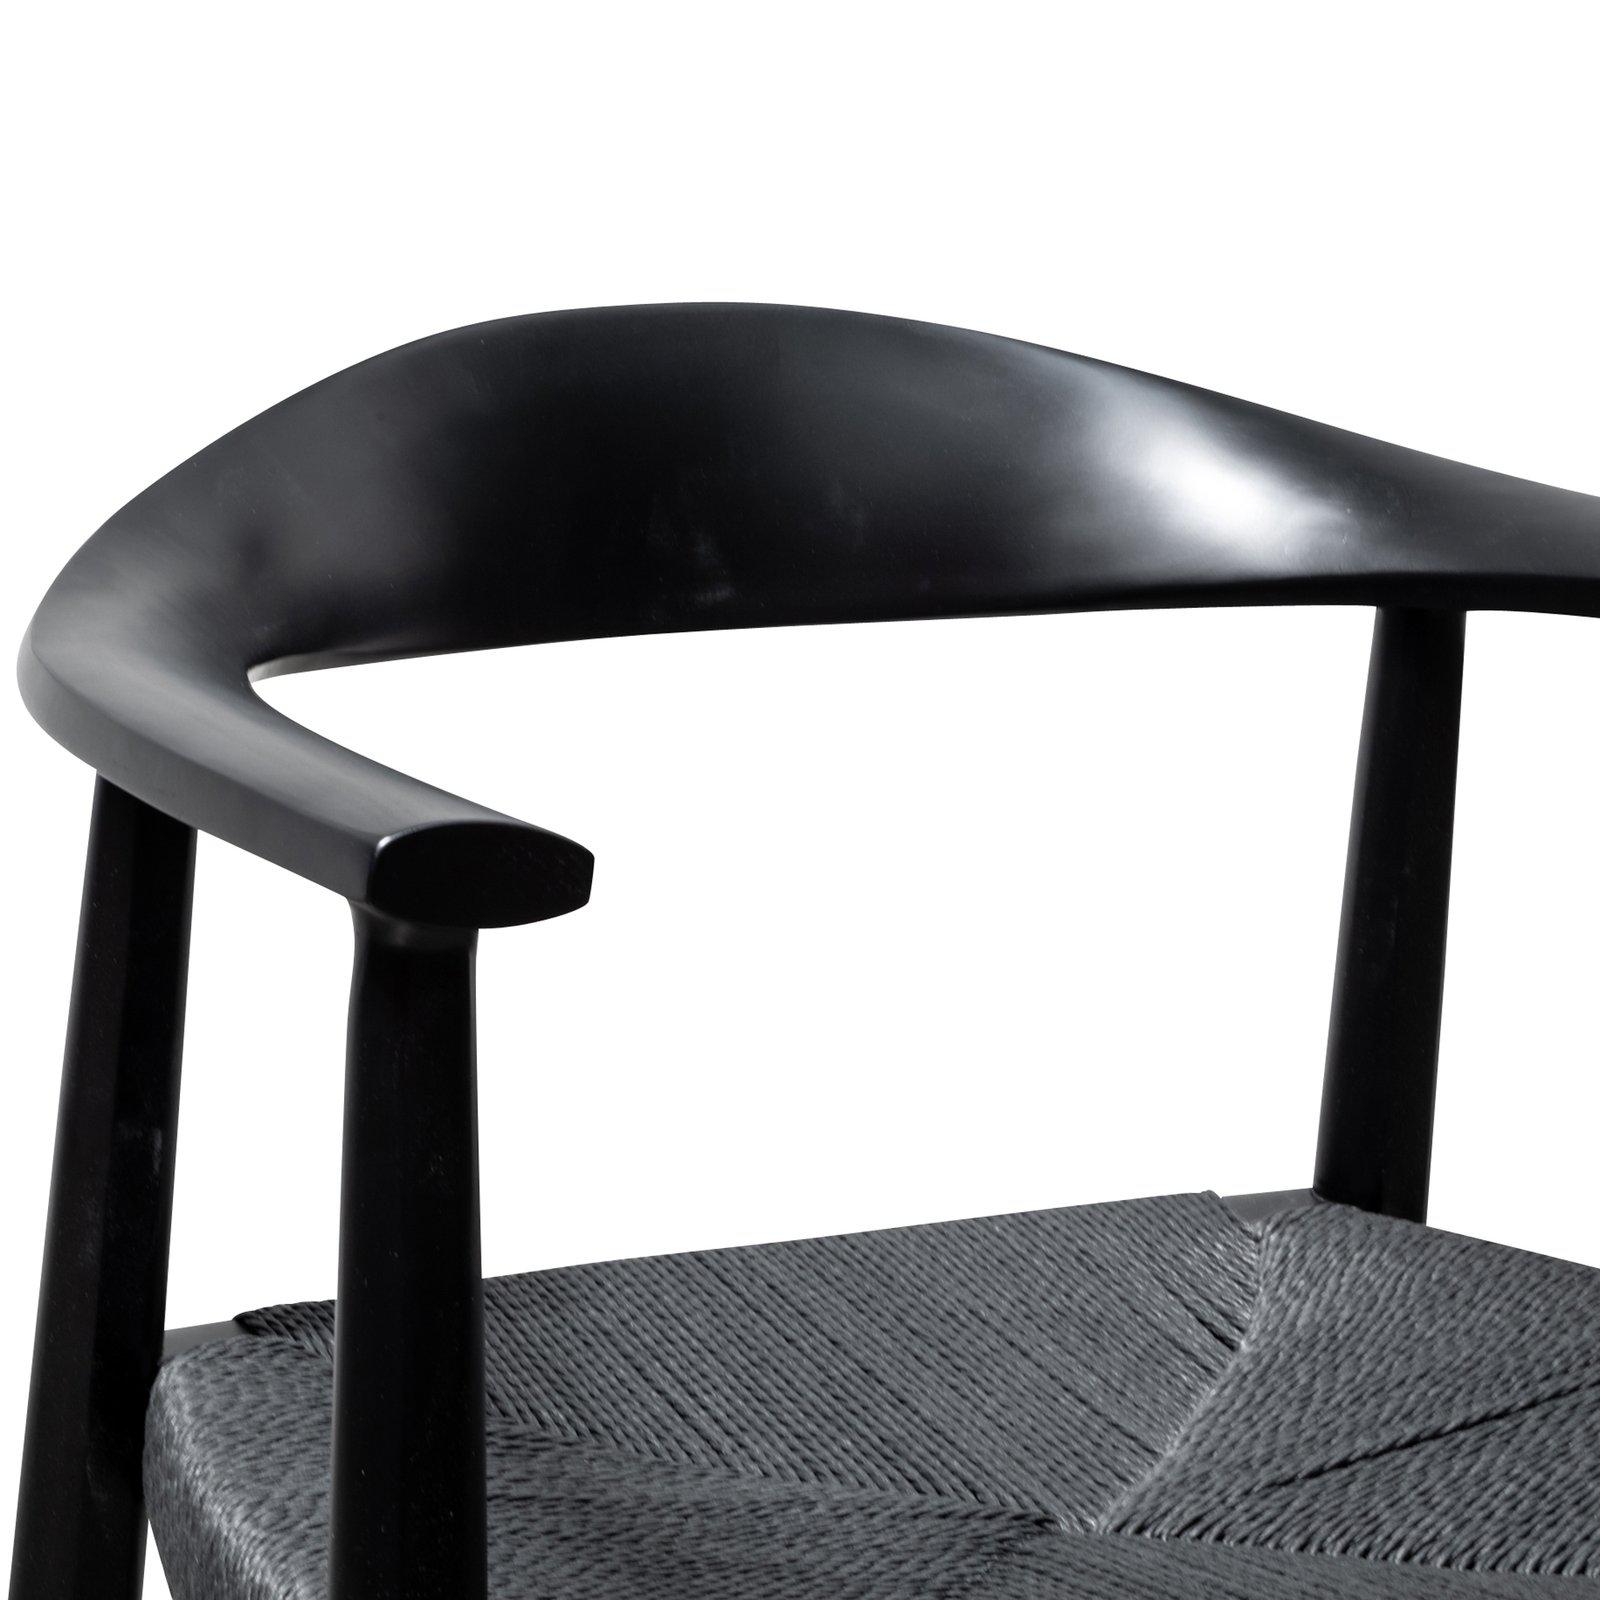 Kensington | Black, Wooden, Mid Century Dining Chair | Black